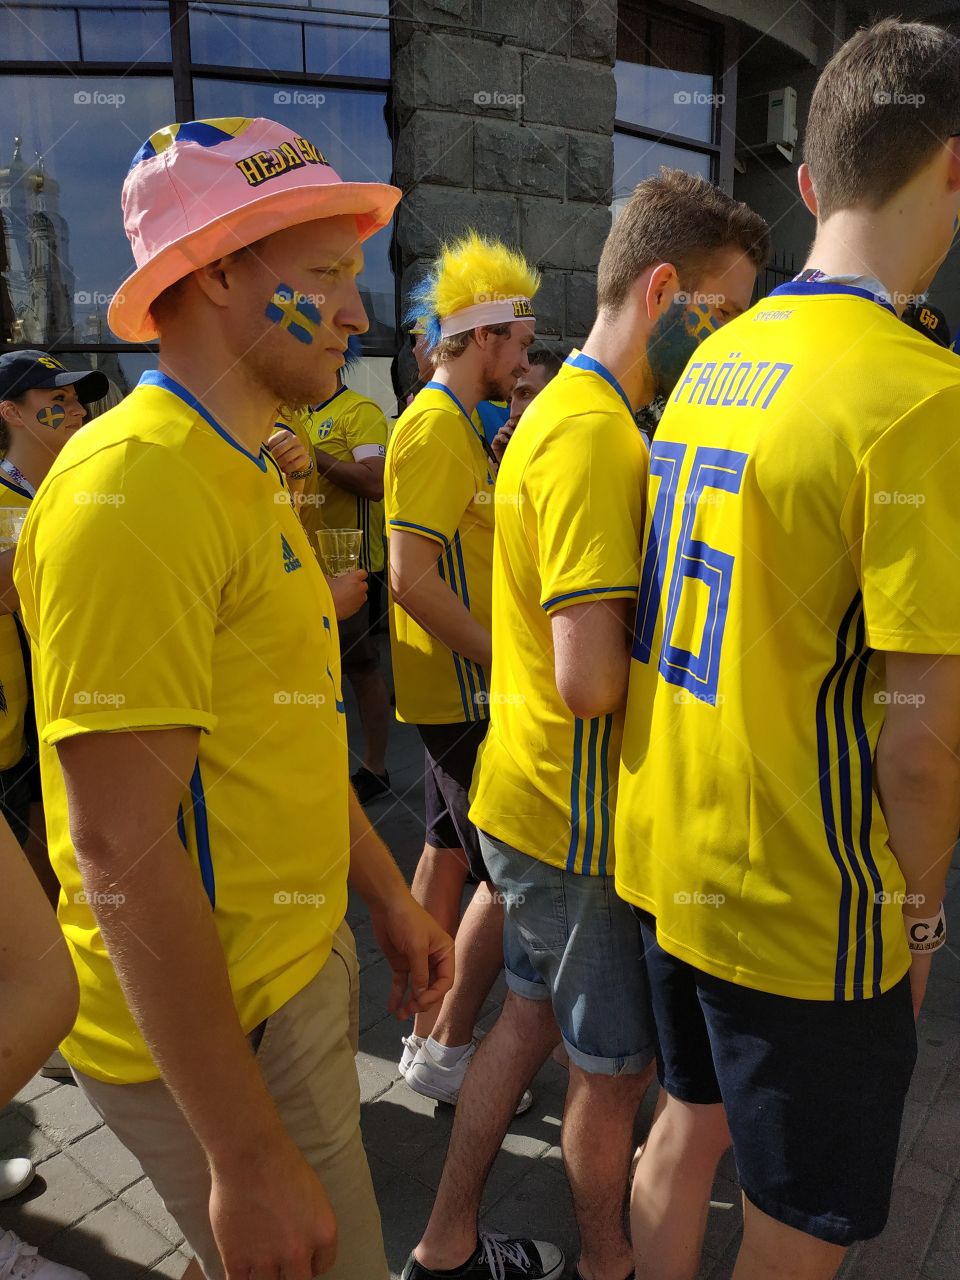 Swedish fans